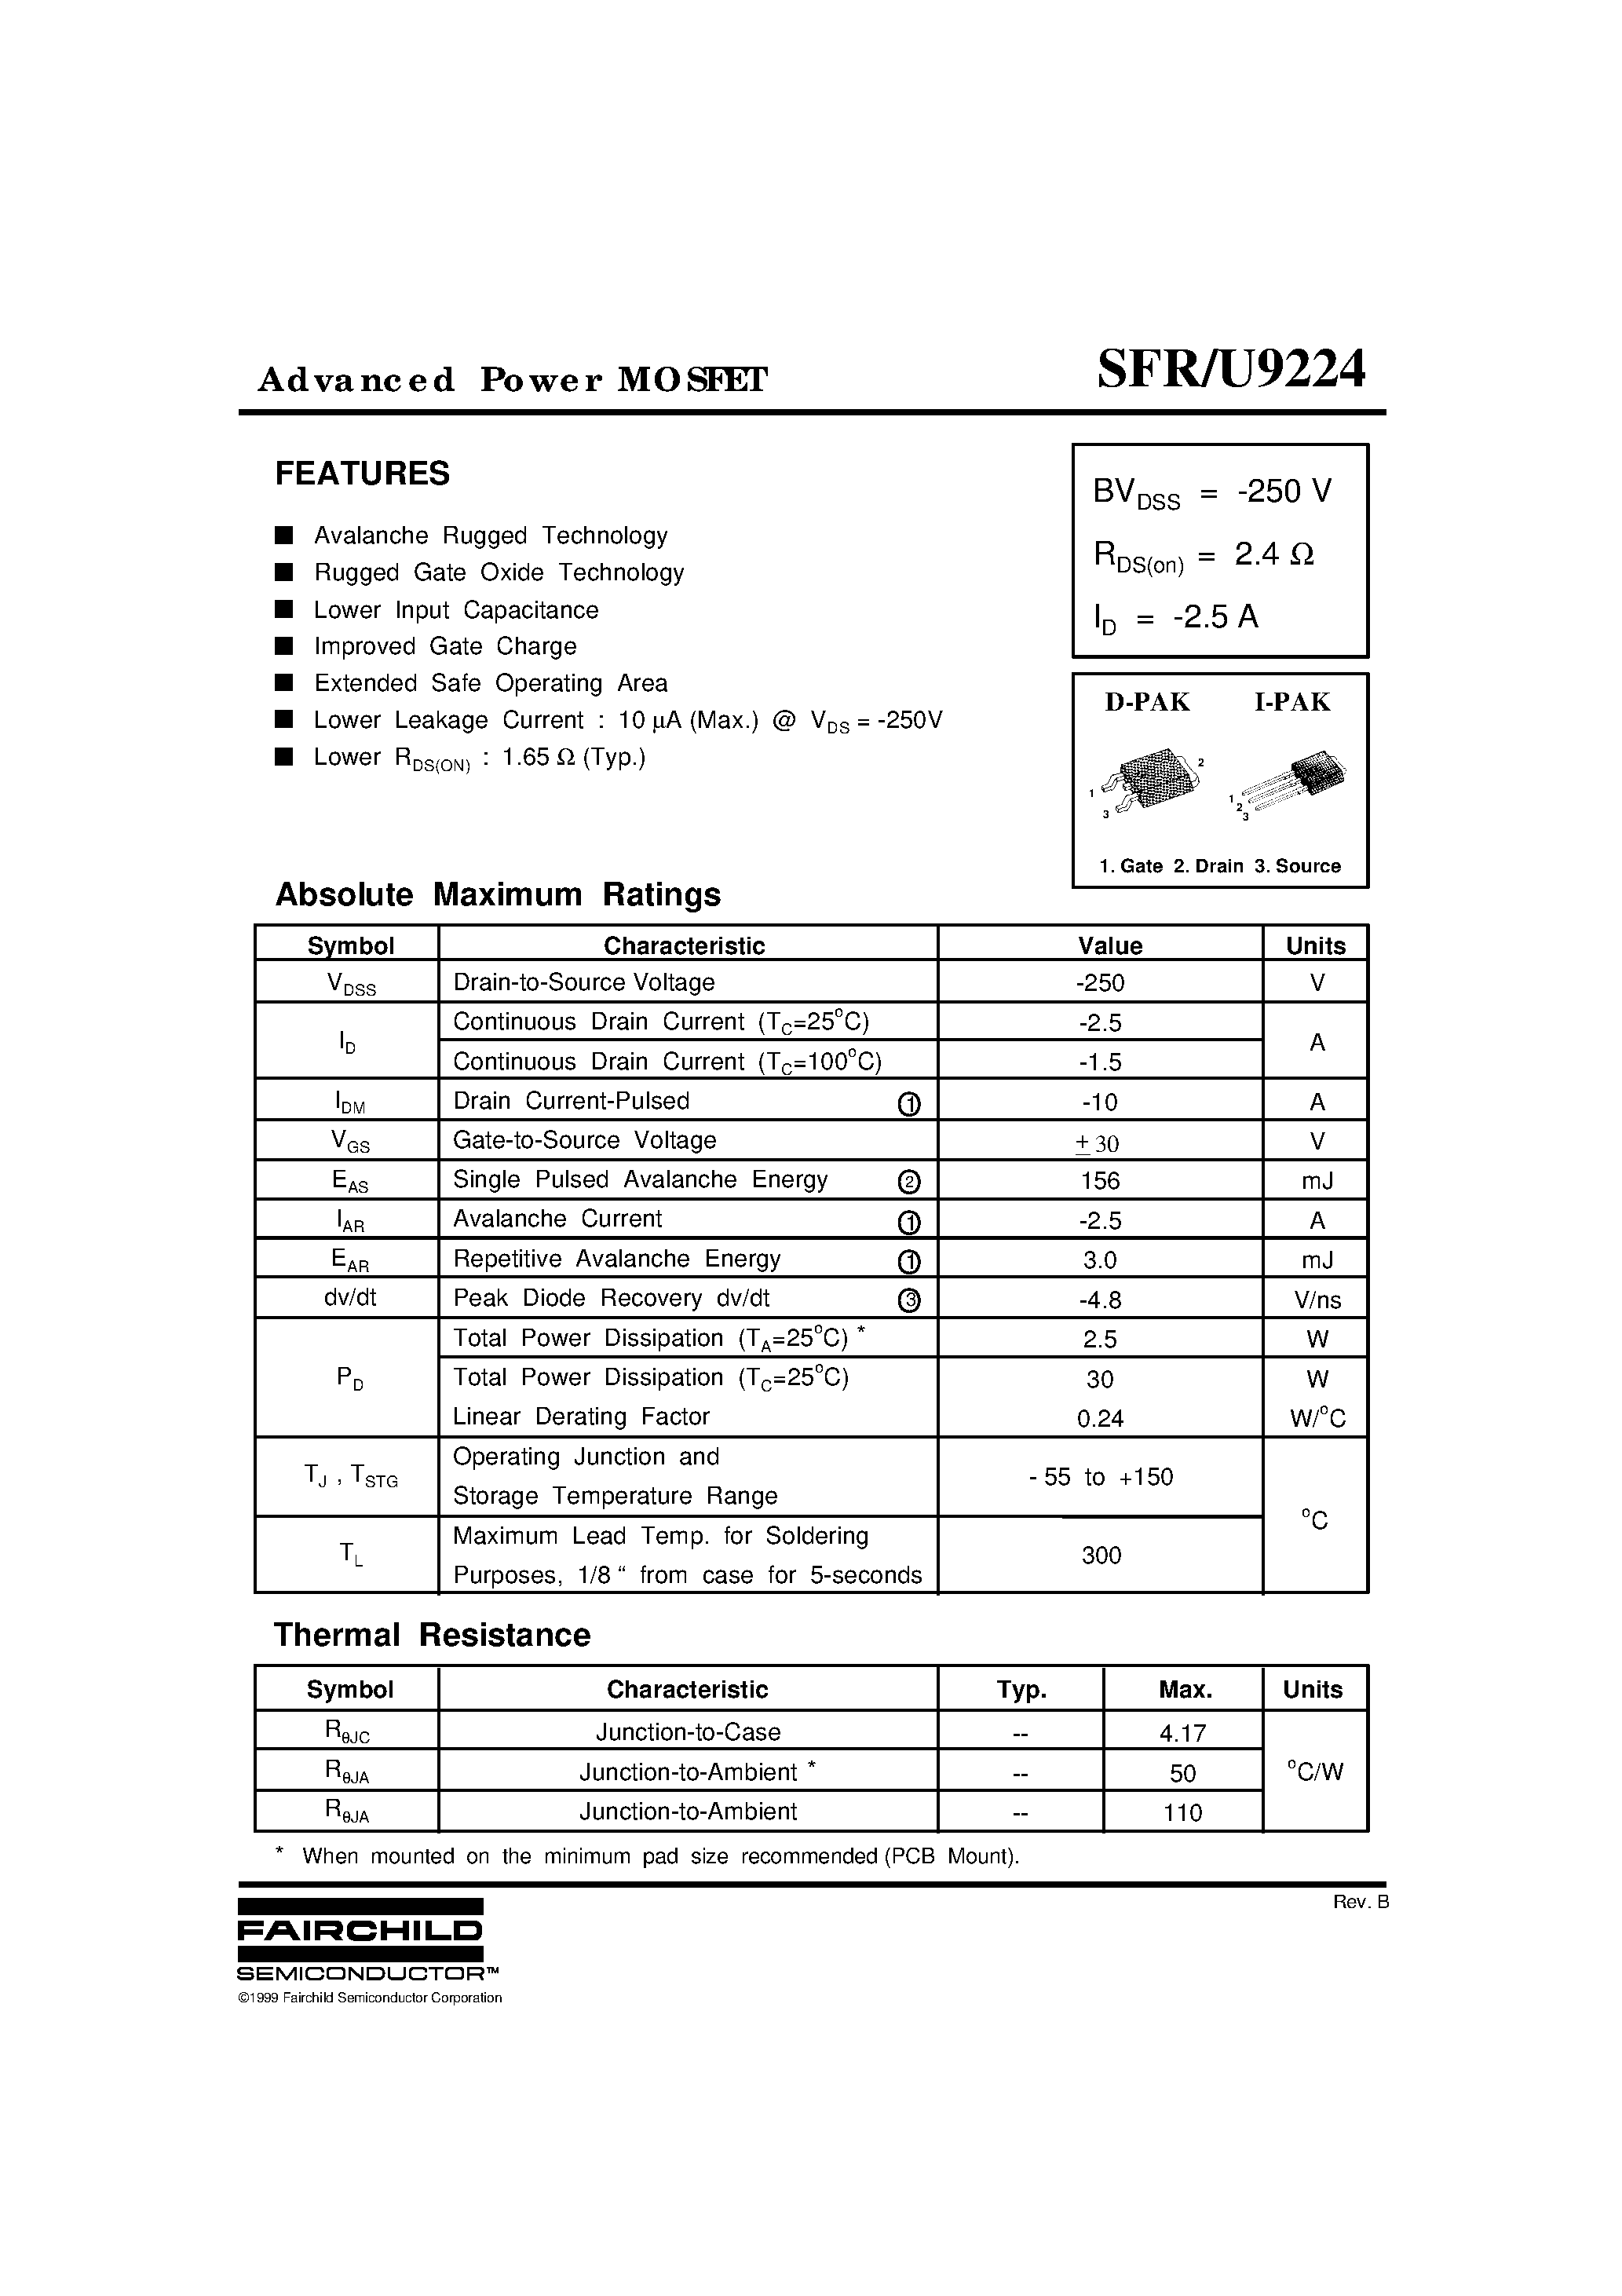 Даташит SFRU9224 - Advanced Power MOSFET страница 1